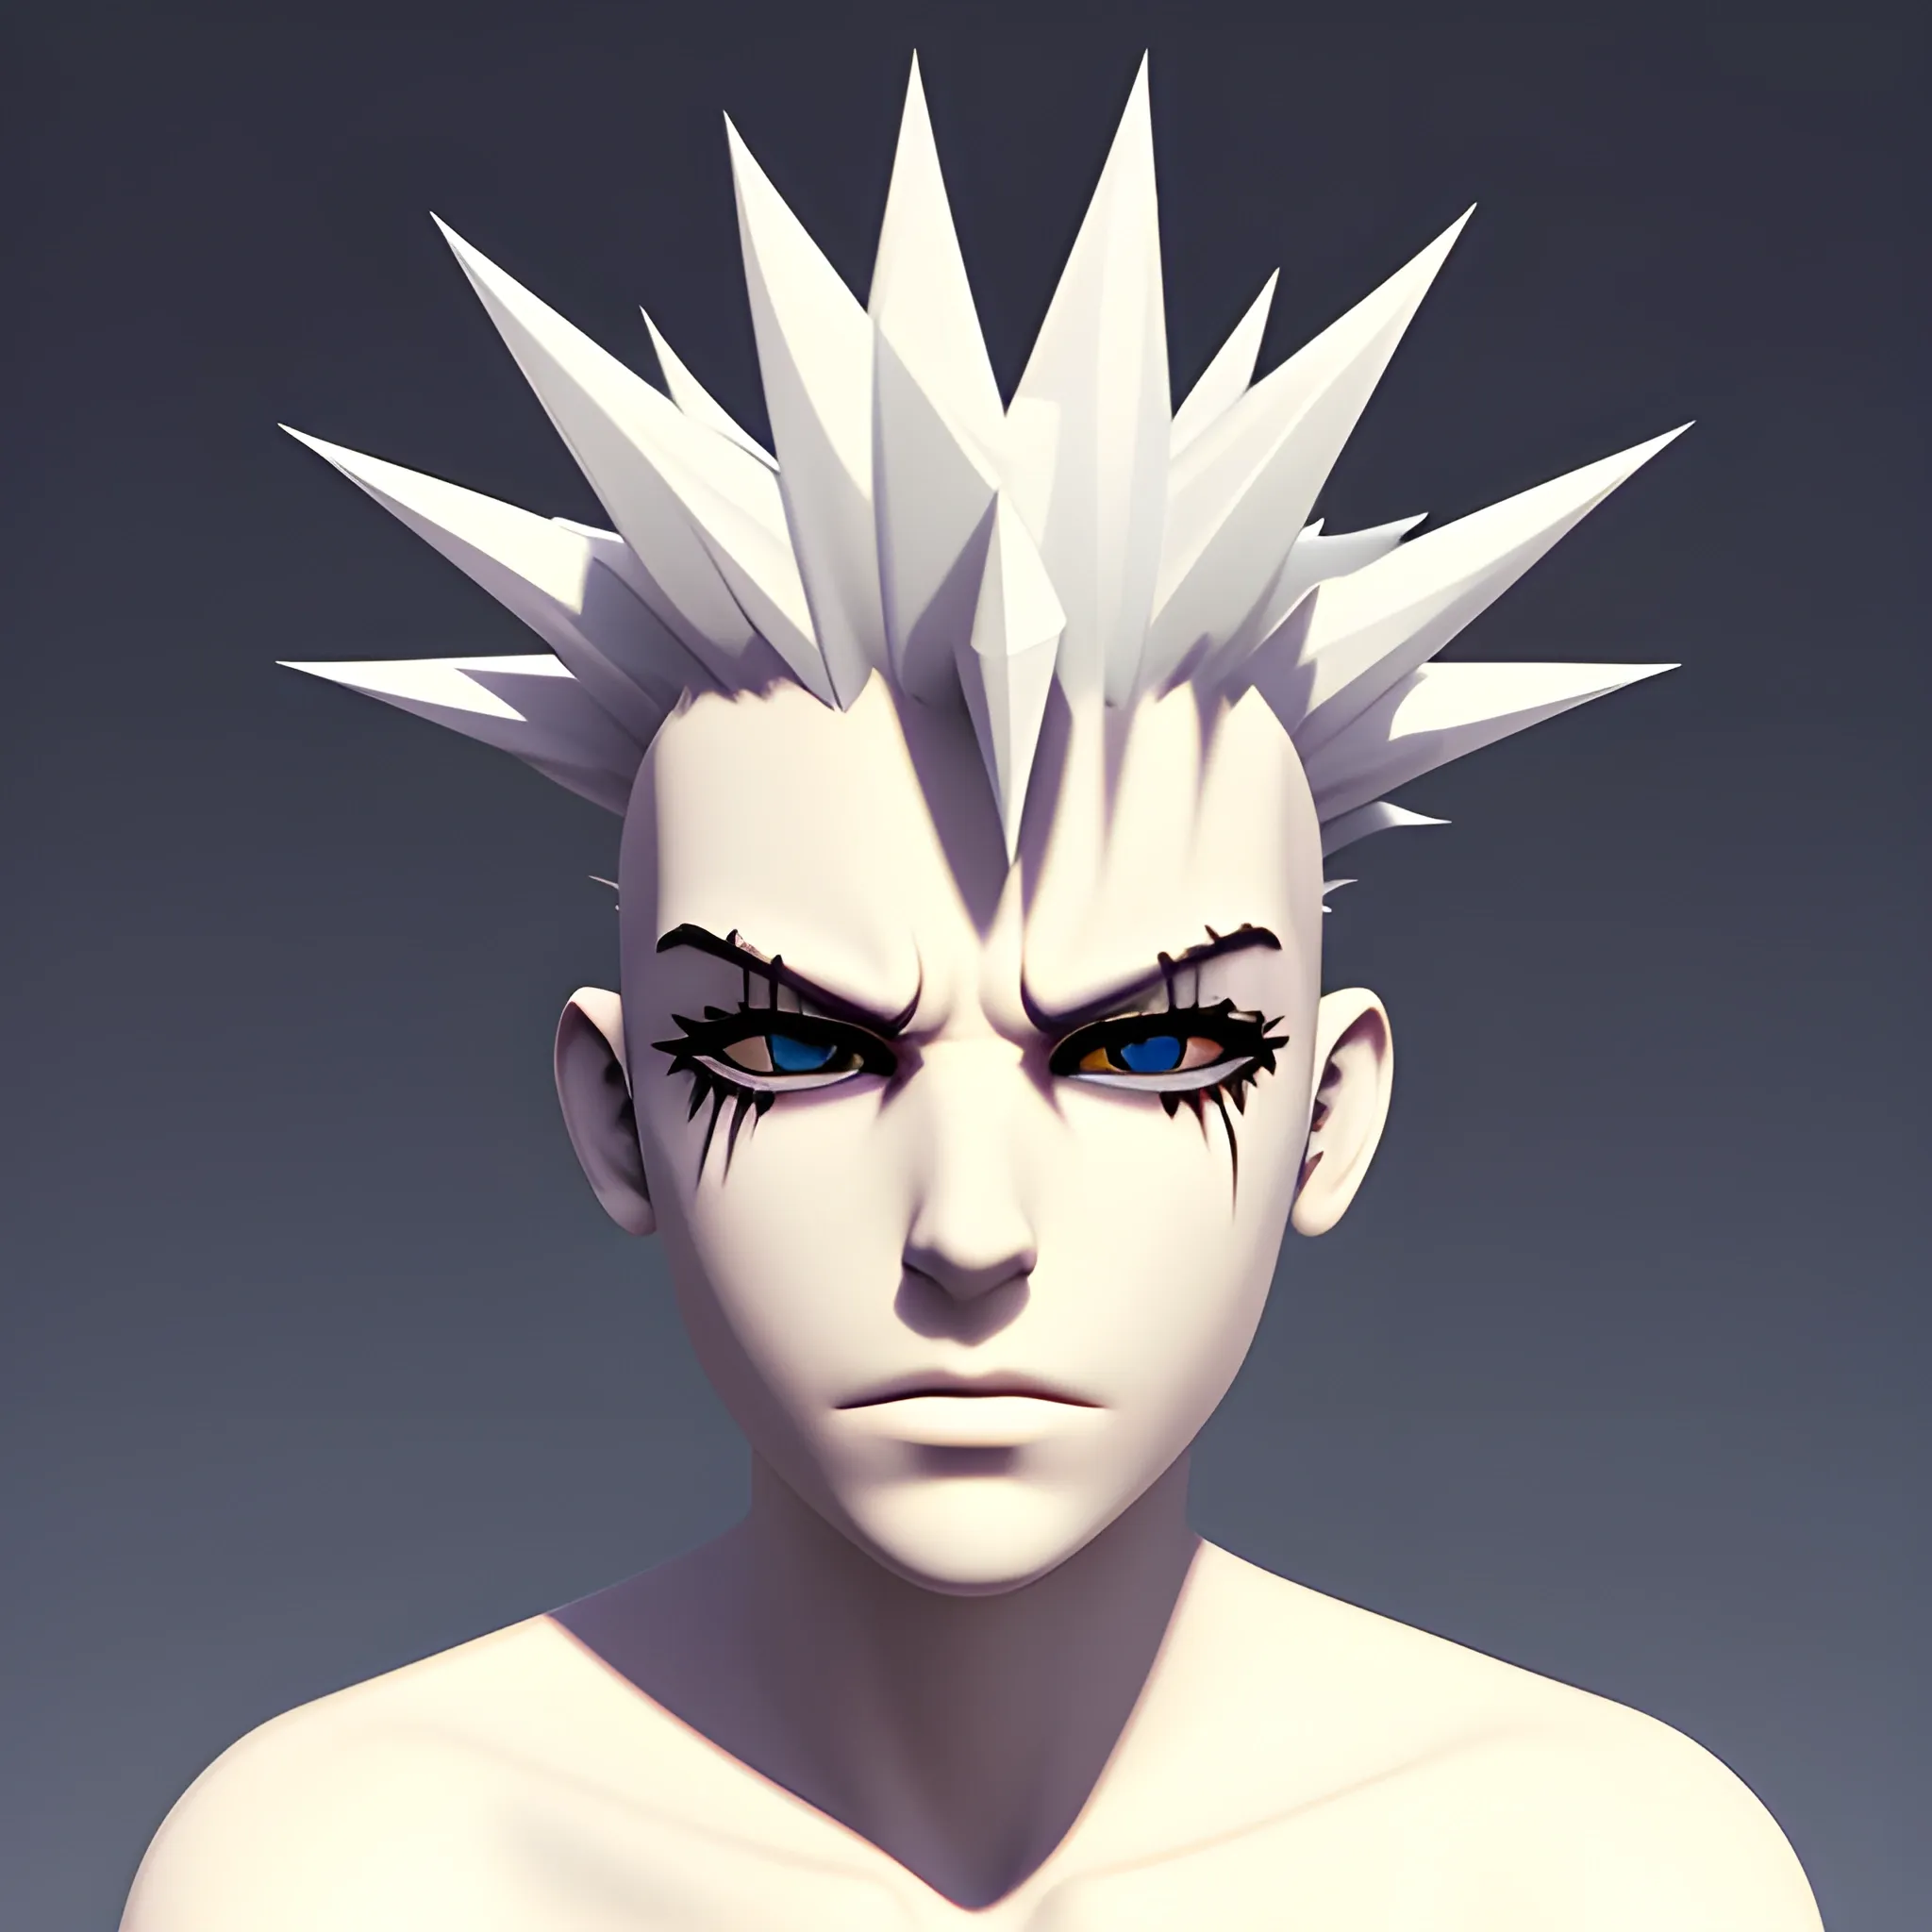 Spiky Head Punk White Character, Left Eye Shape of Plus Symbol, 3D